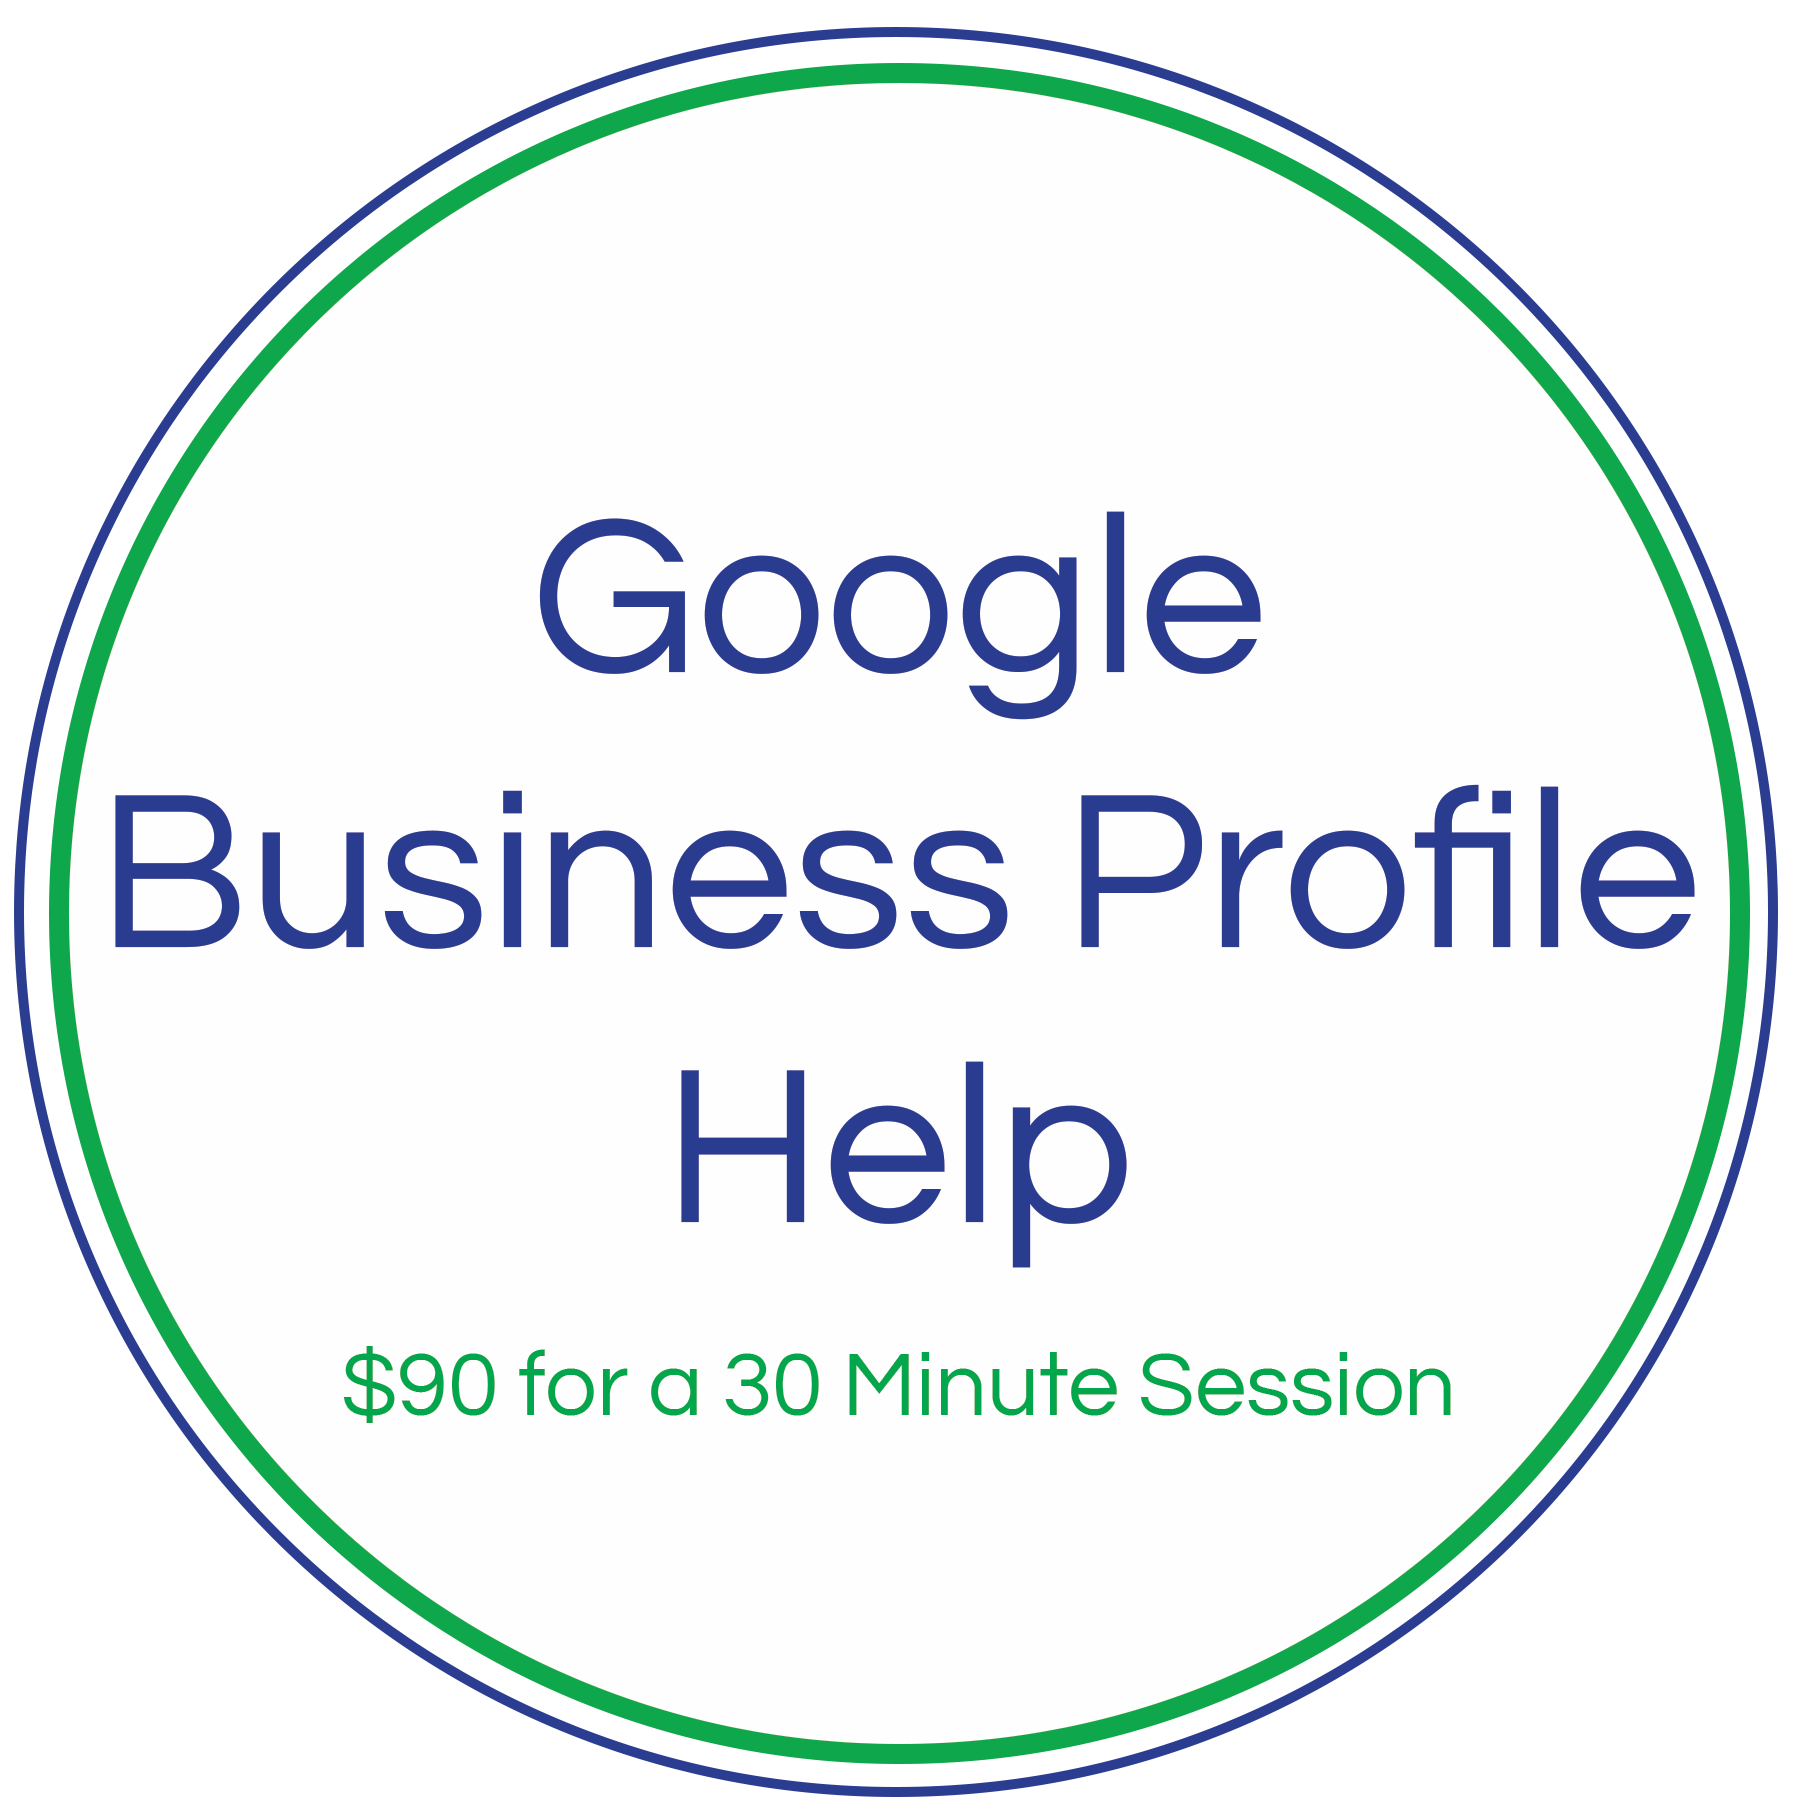 Google Business Profile help session.